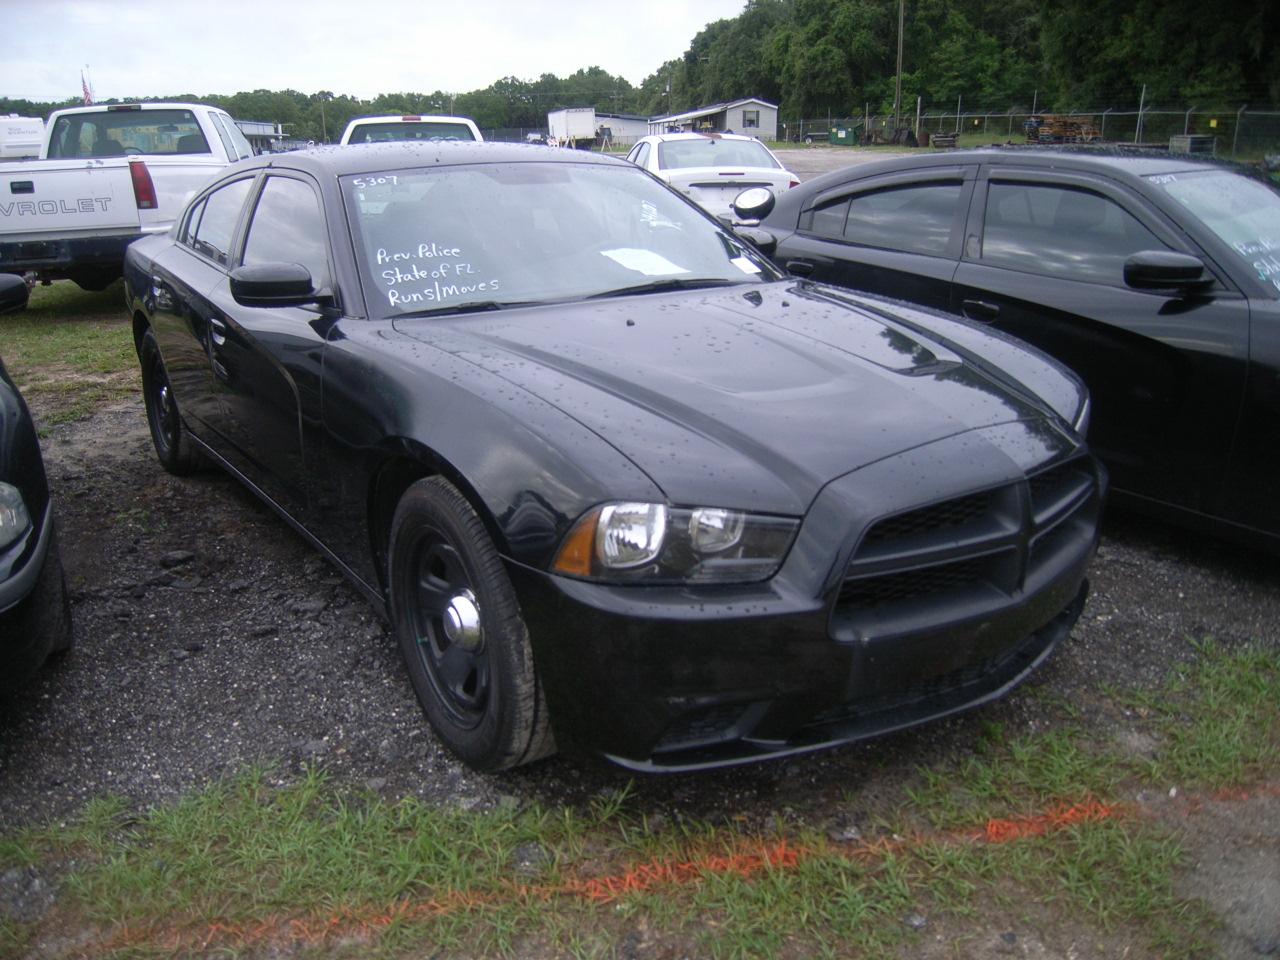 6-06114 (Cars-Sedan 4D)  Seller:Florida State FHP 2012 DODG CHARGER